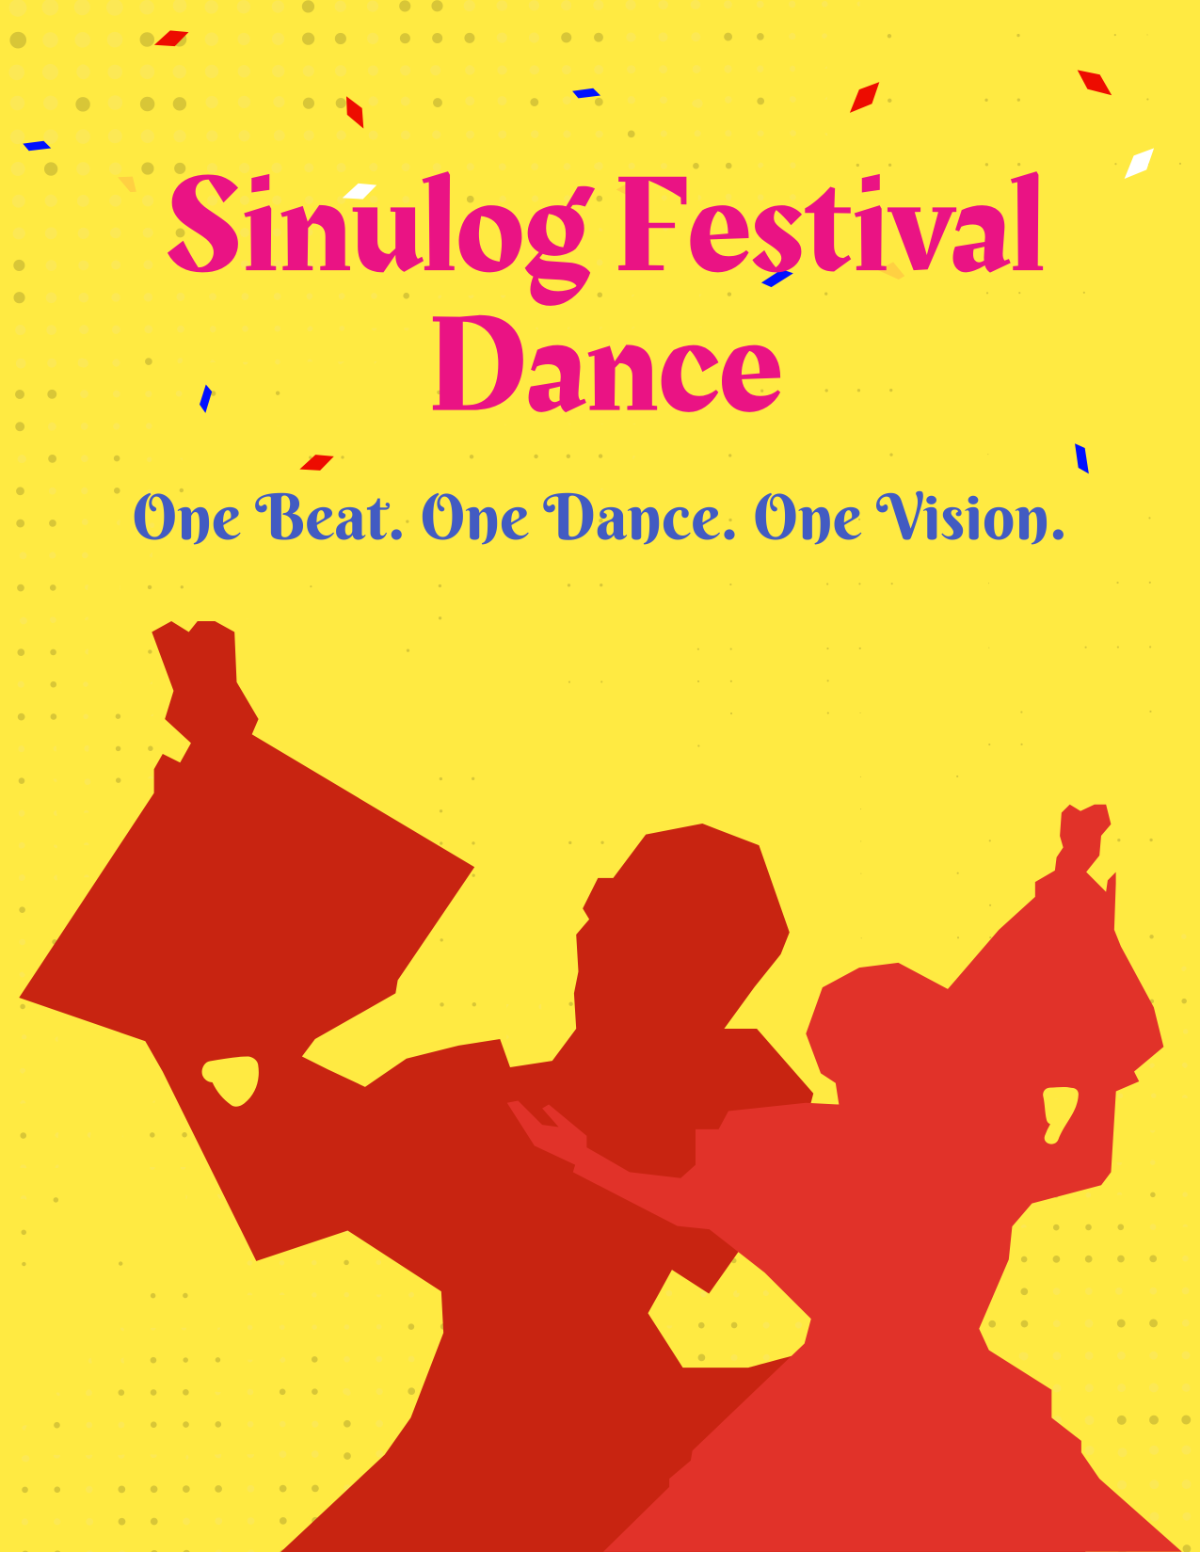 Sinulog Festival Dance Flyer Template